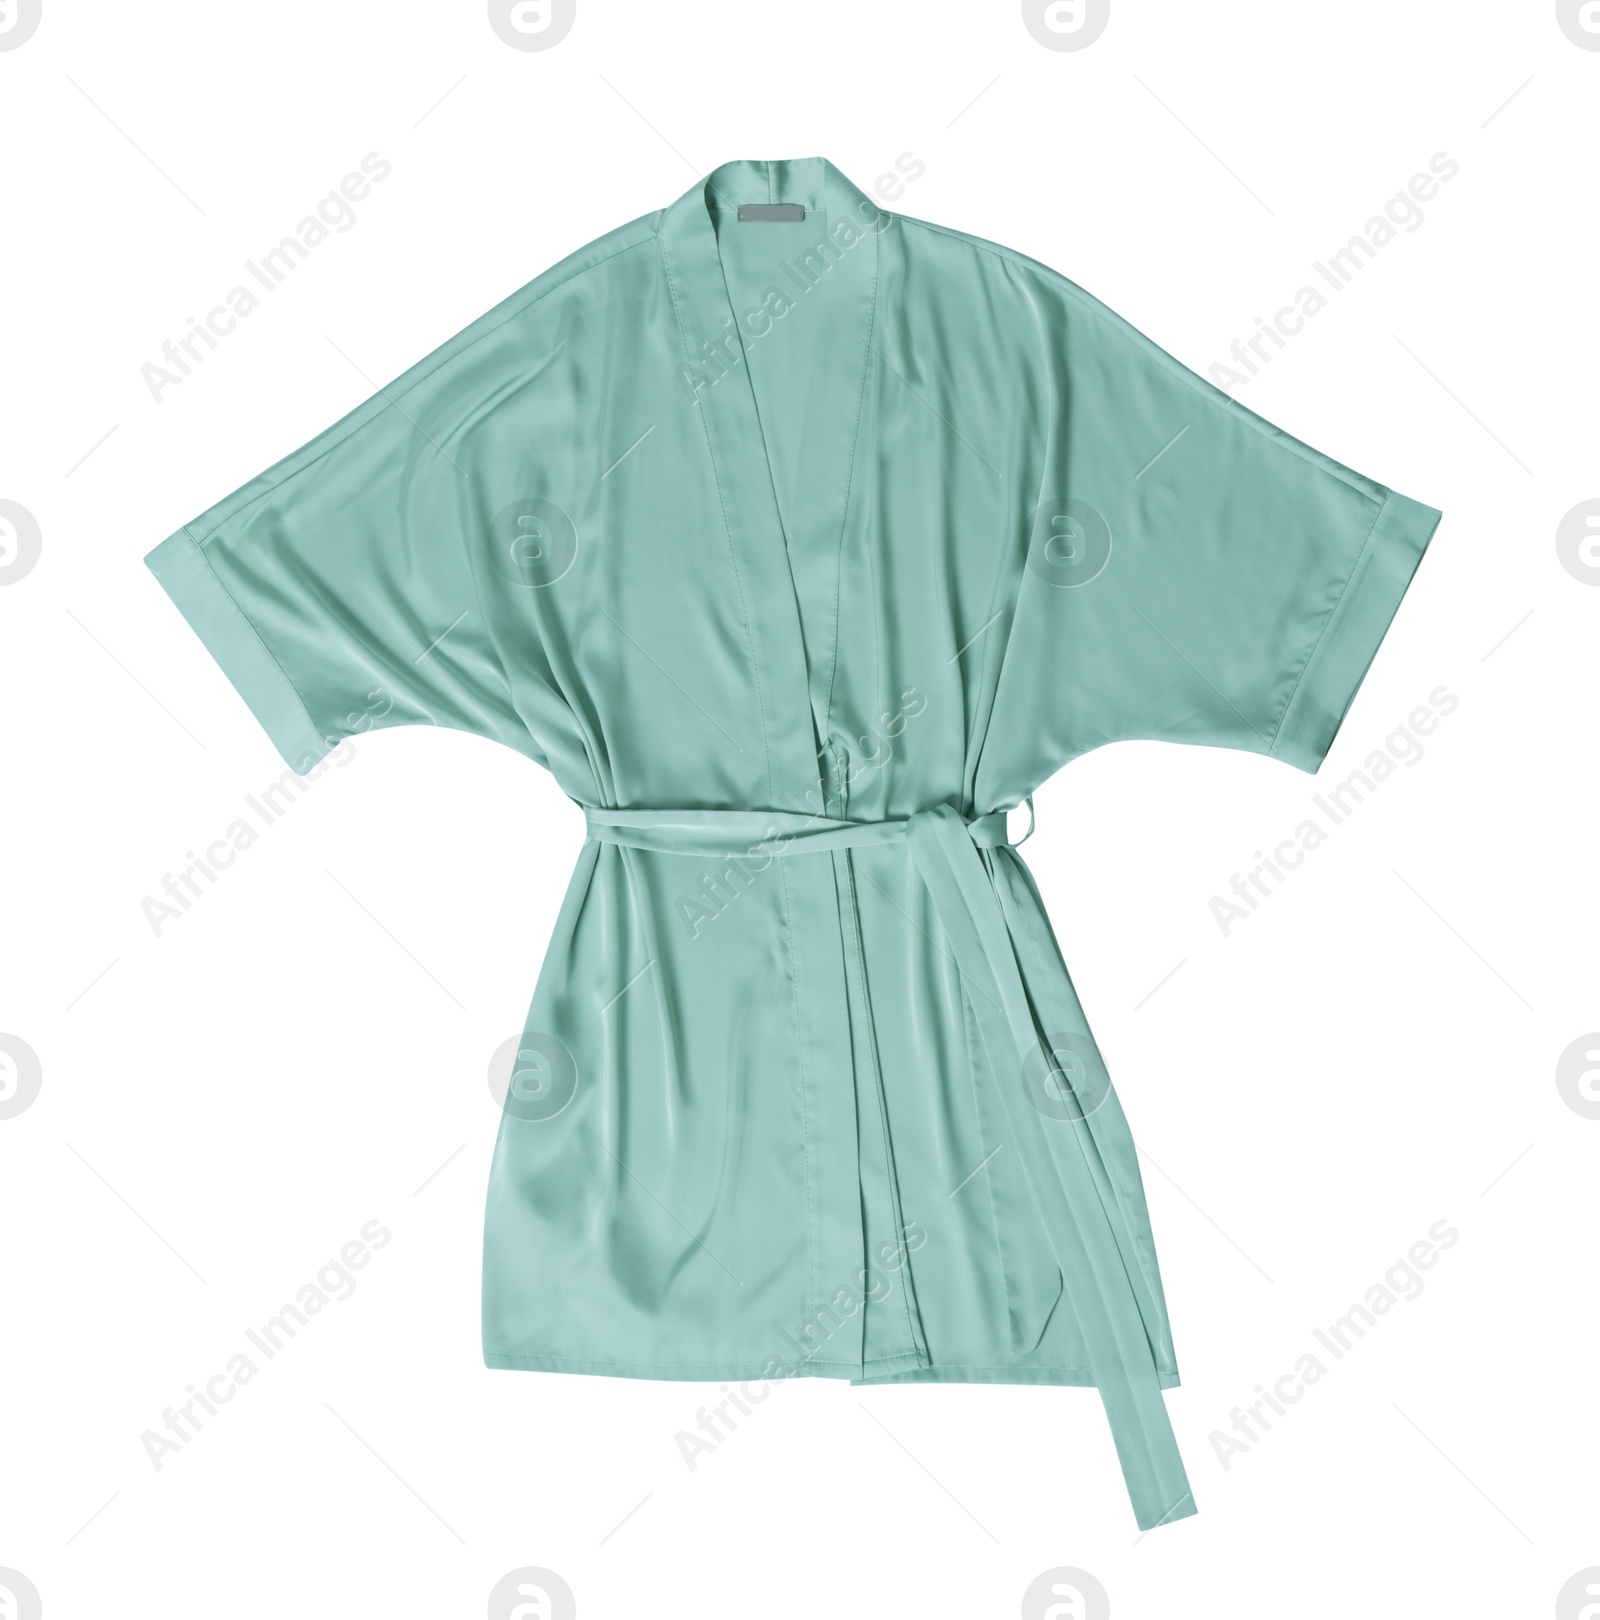 Photo of Pale green silk bathrobe isolated on white